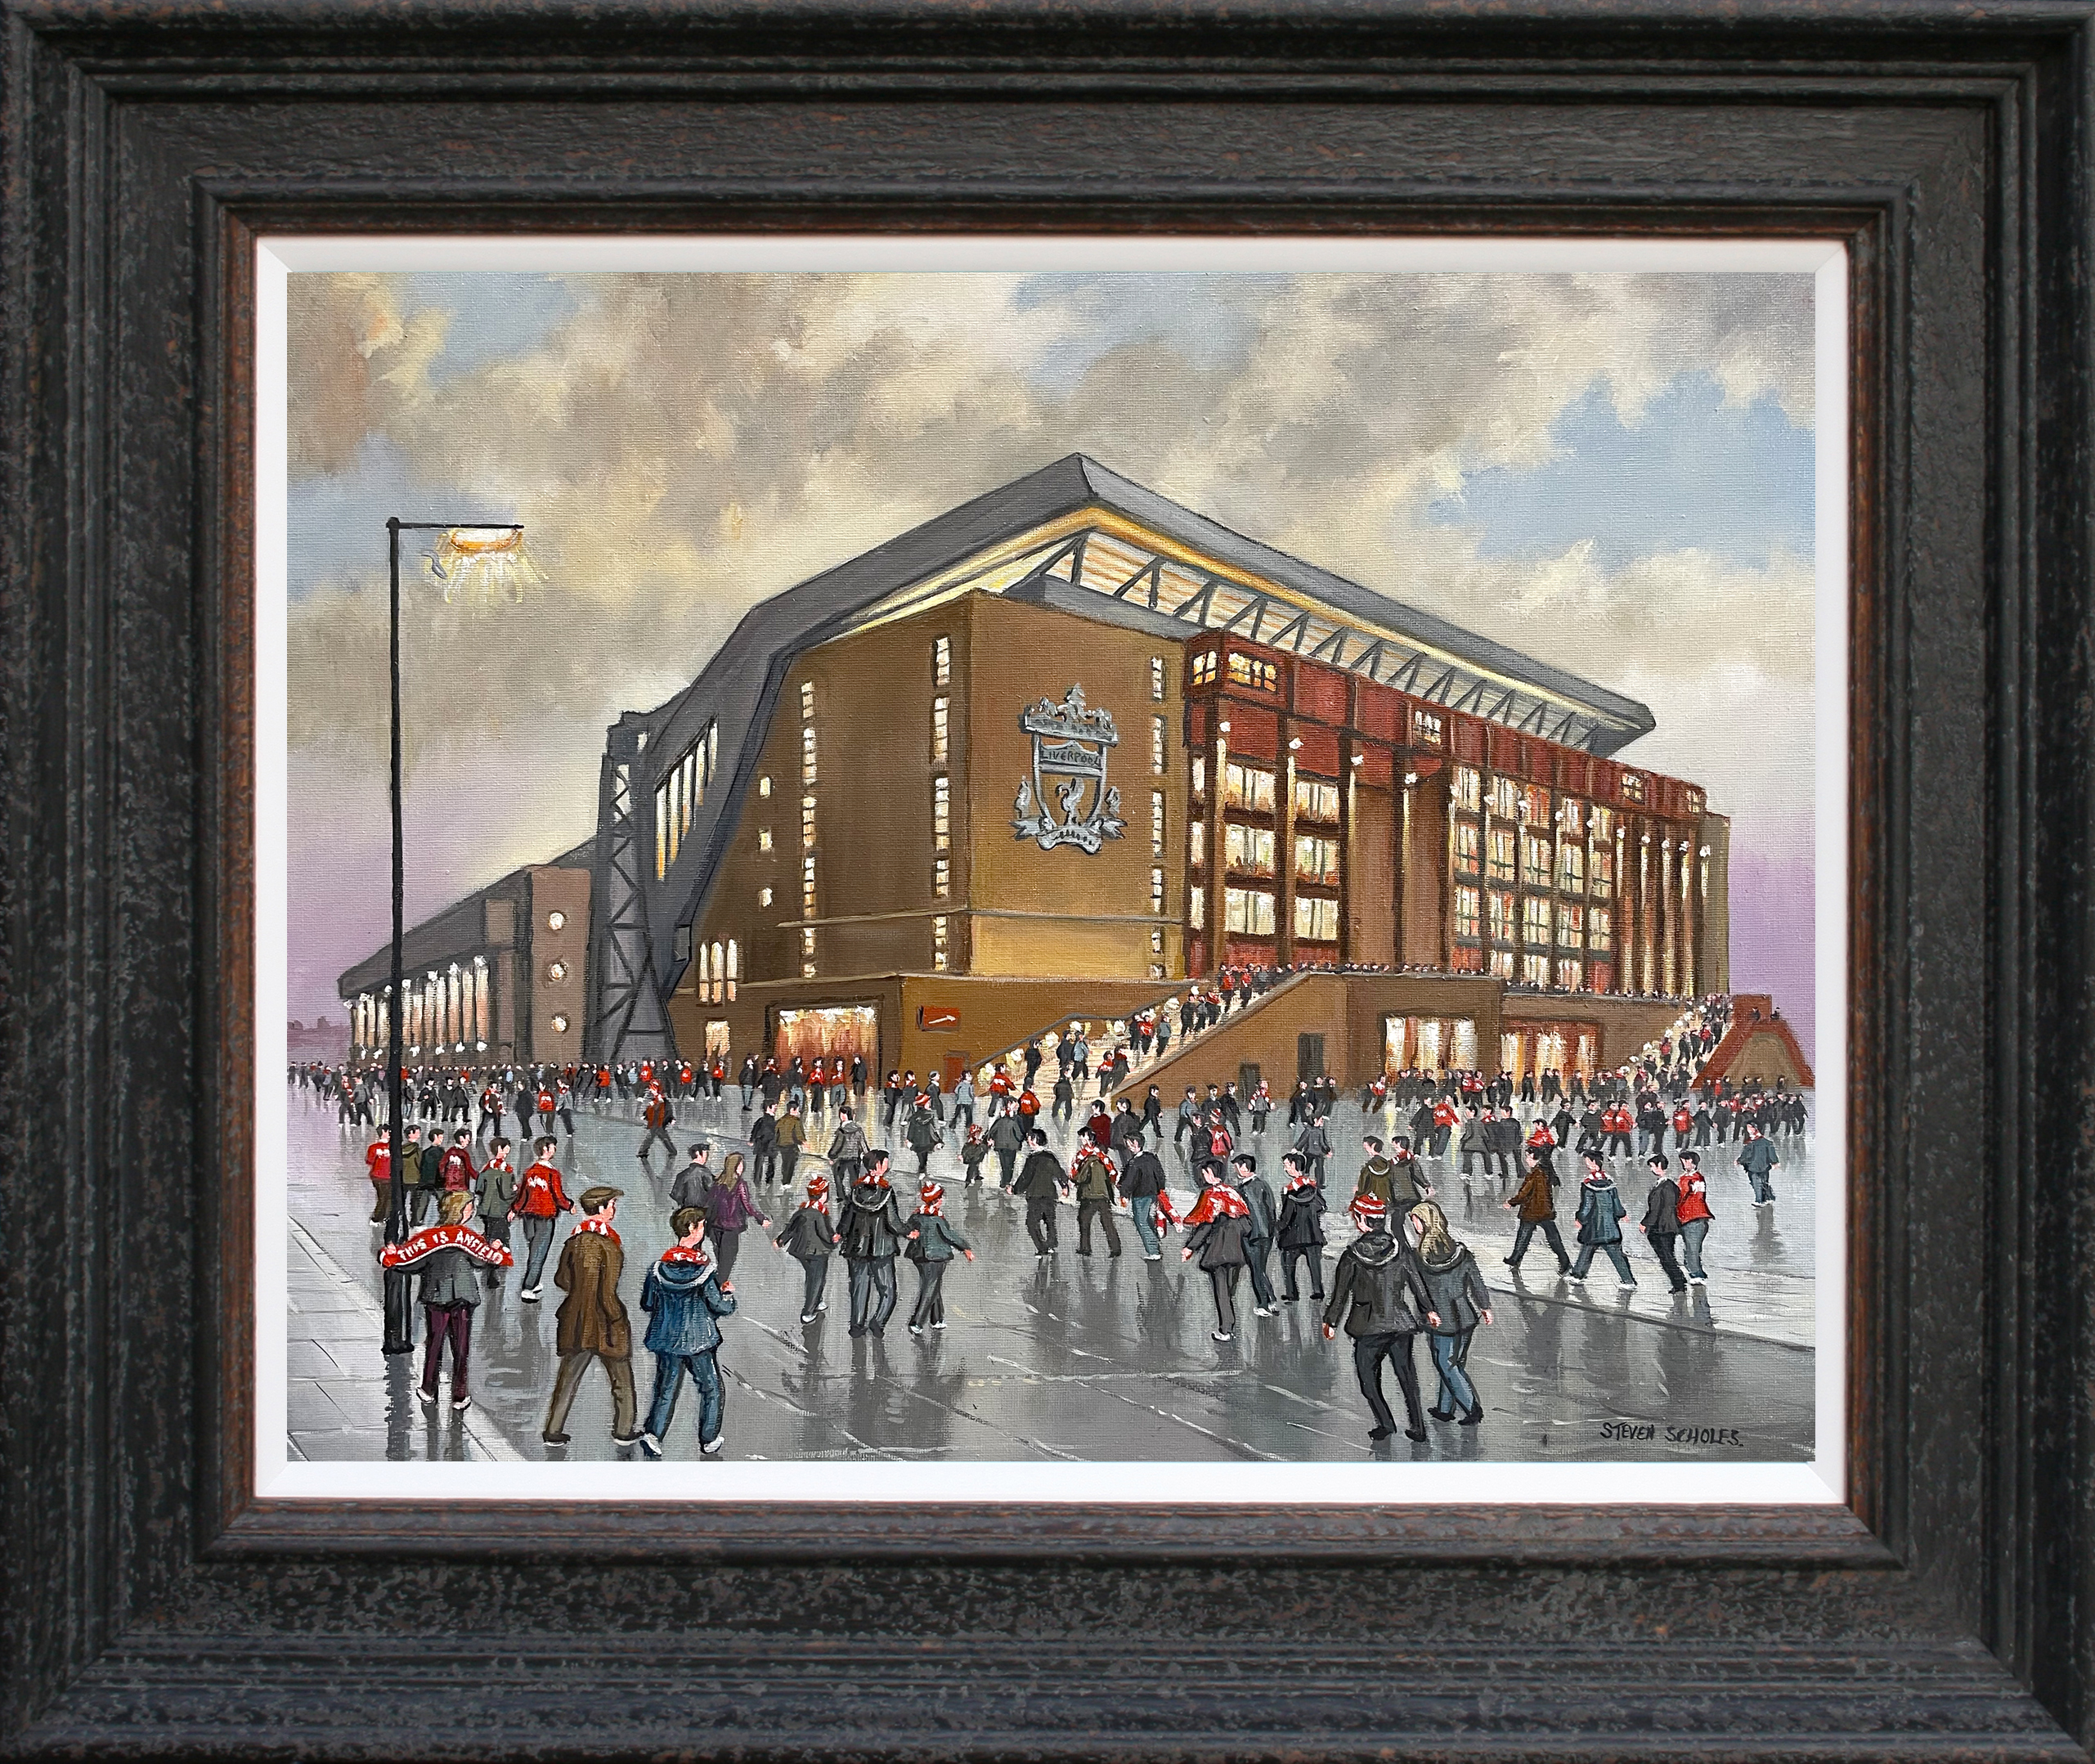 Steven Scholes, Original Oil Painting, Anfield, Liverpool Football Club